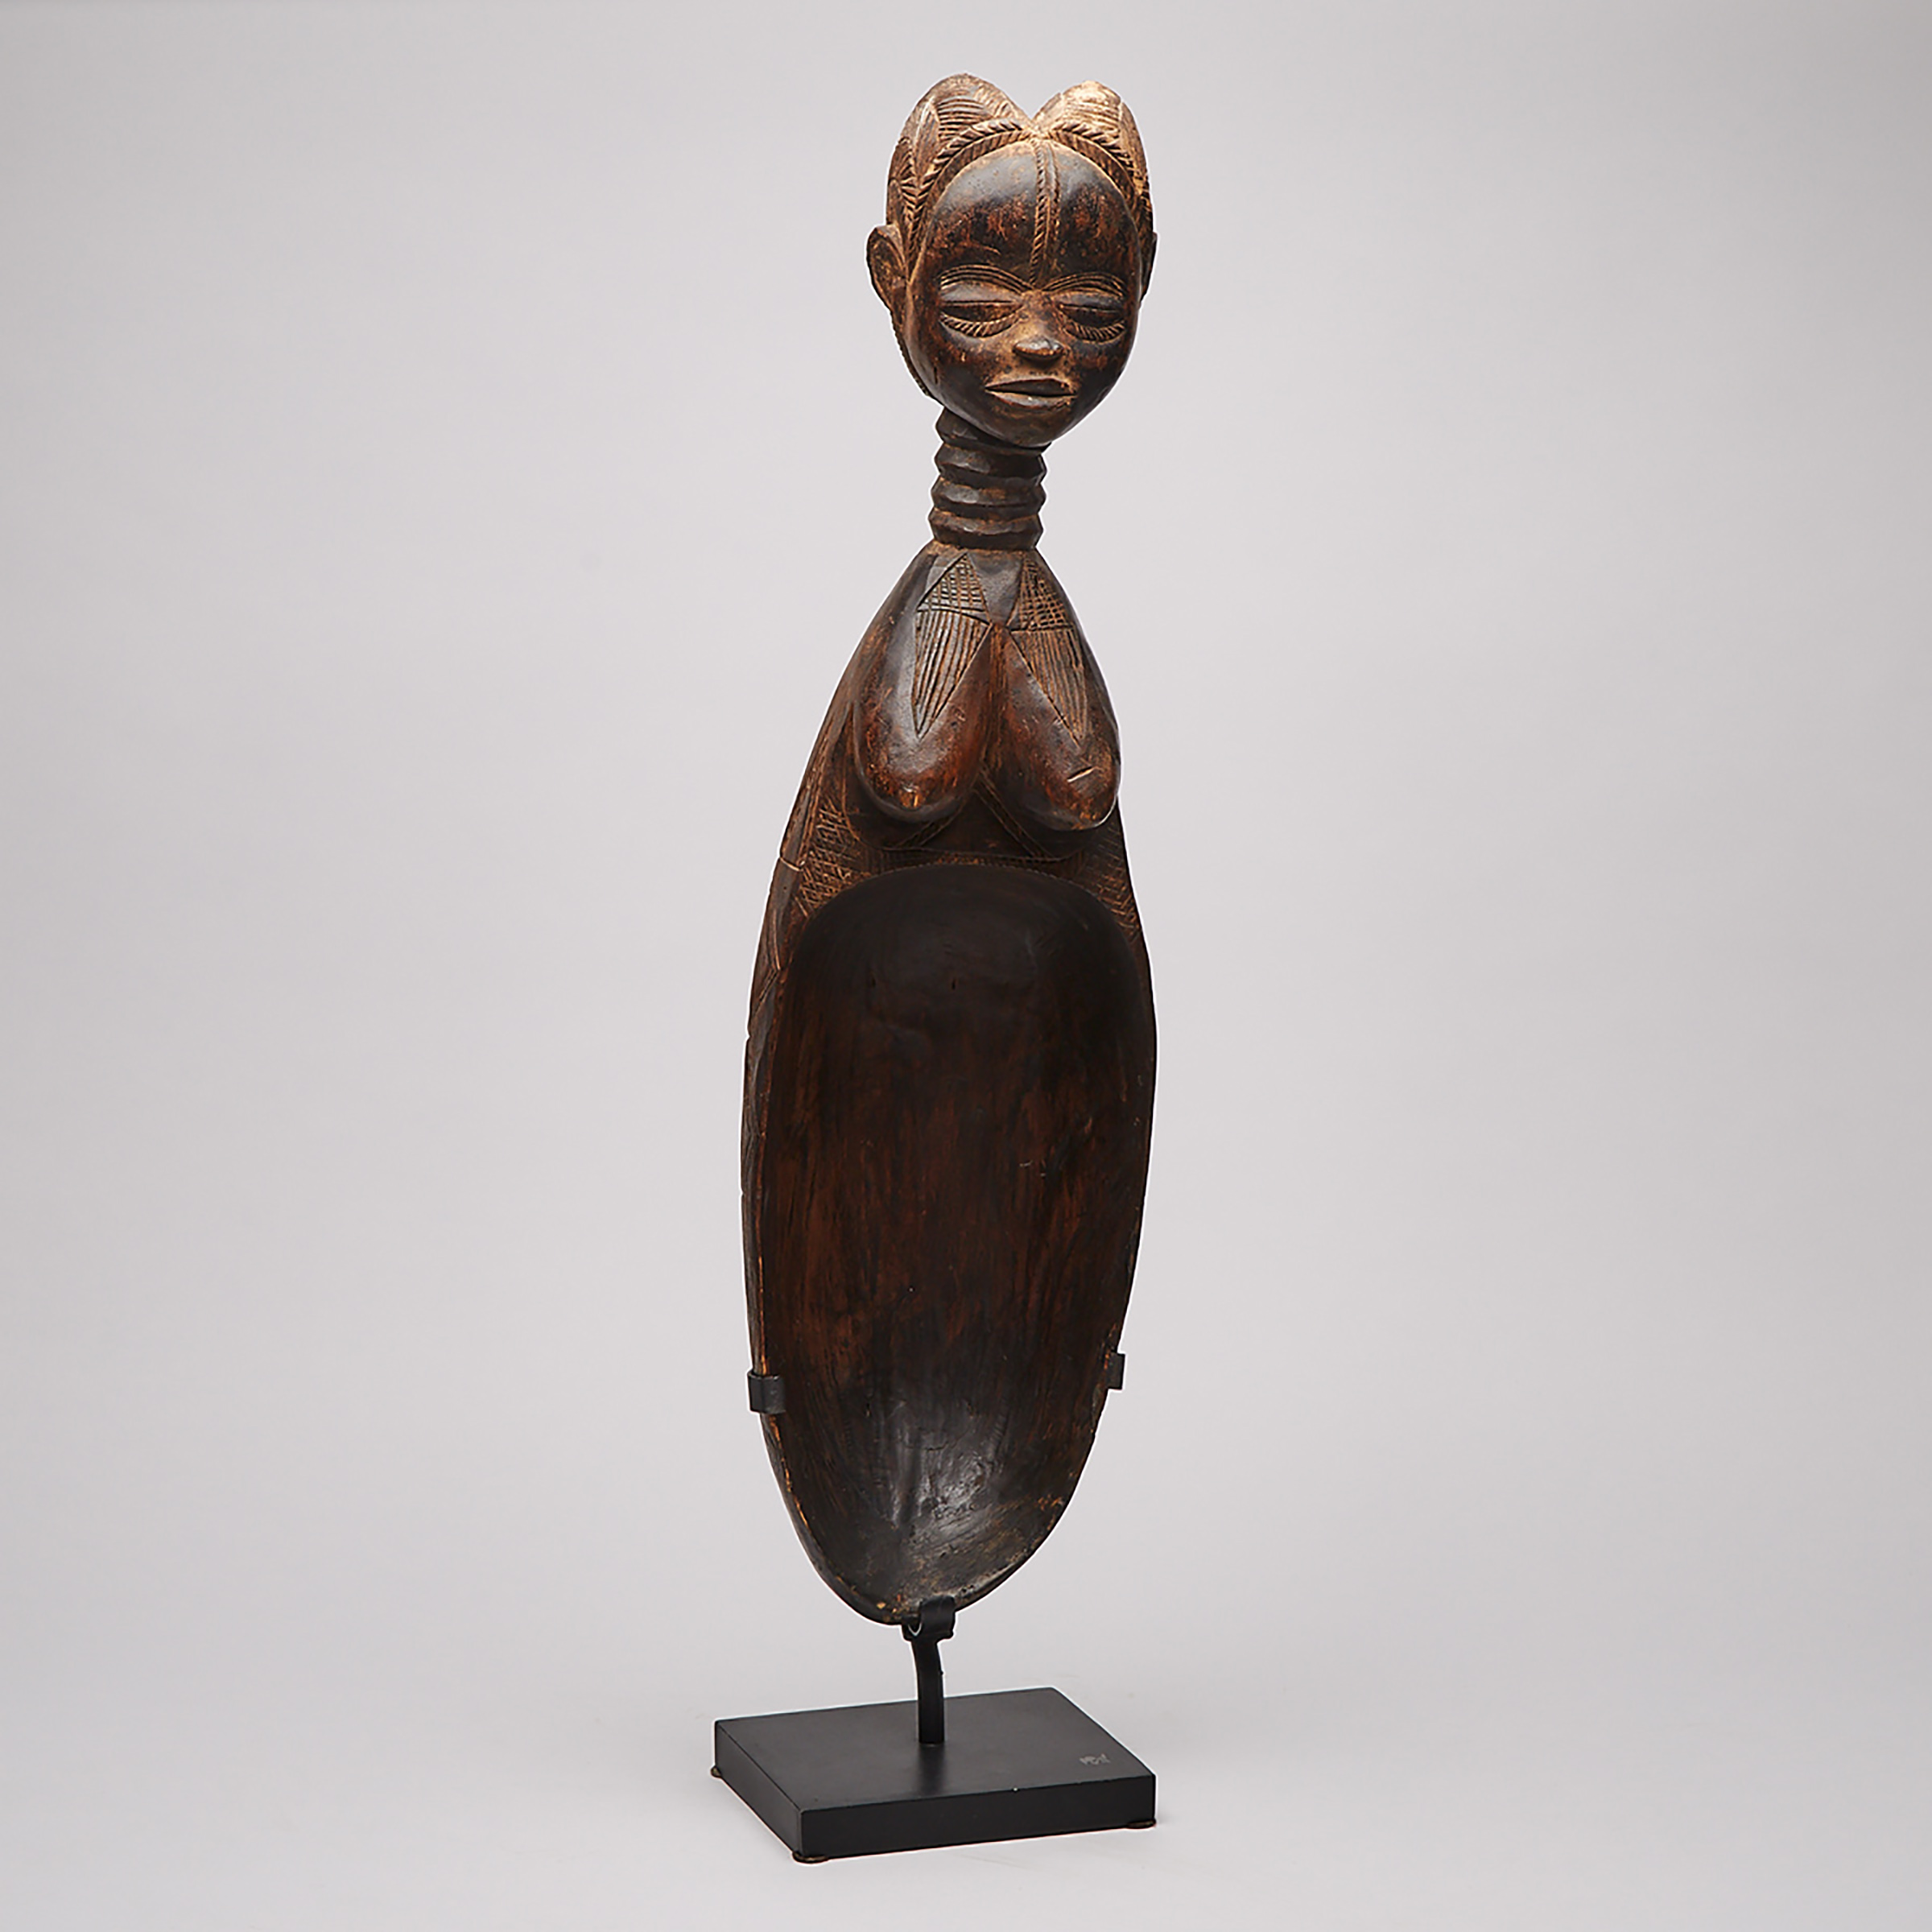 Dan Female Figural Spoon, Ivory Coast/ Liberia, West Africa